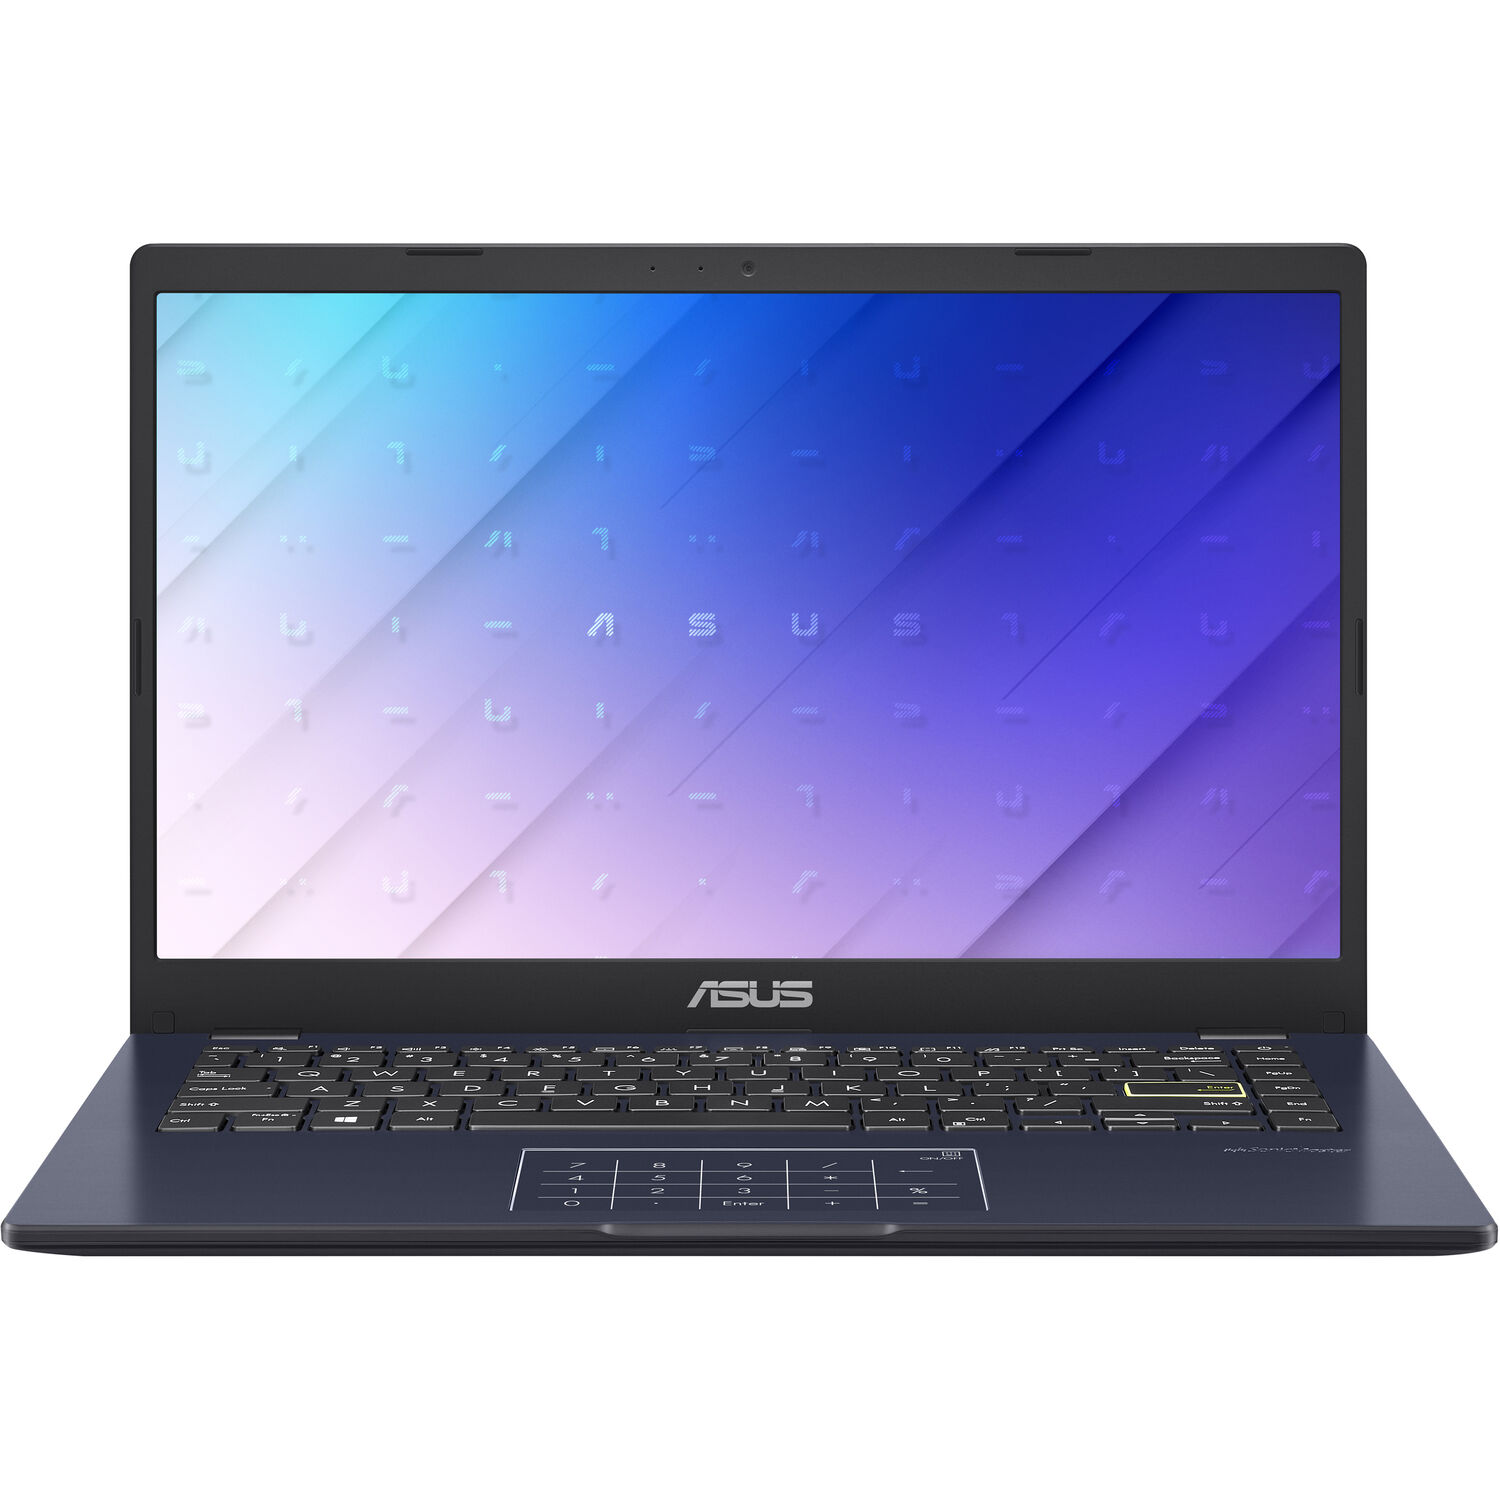 ASUS 14 L410 Everyday Value Laptop (Intel Celeron N4020 2-Core, 4GB RAM, 128GB PCIe SSD, 14.0" Full HD (1920x1080), Intel UHD 600, Wifi, Bluetooth, Webcam, 1xUSB 3.2, 1xHDMI, Win 10 Home) - image 1 of 6